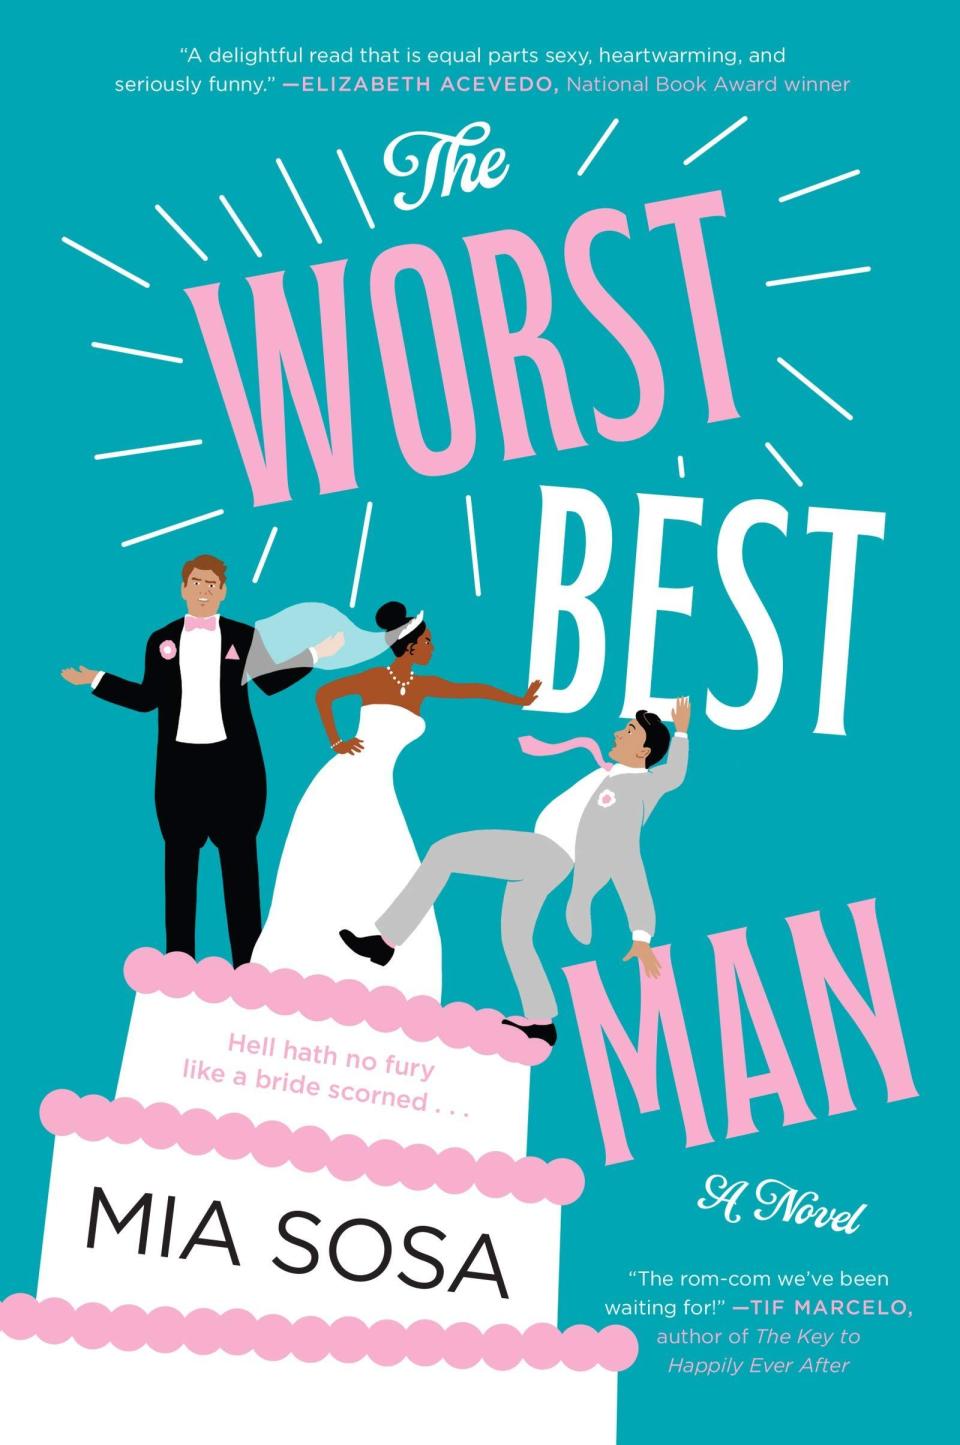 47) 'The Worst Best Man' by Mia Sosa